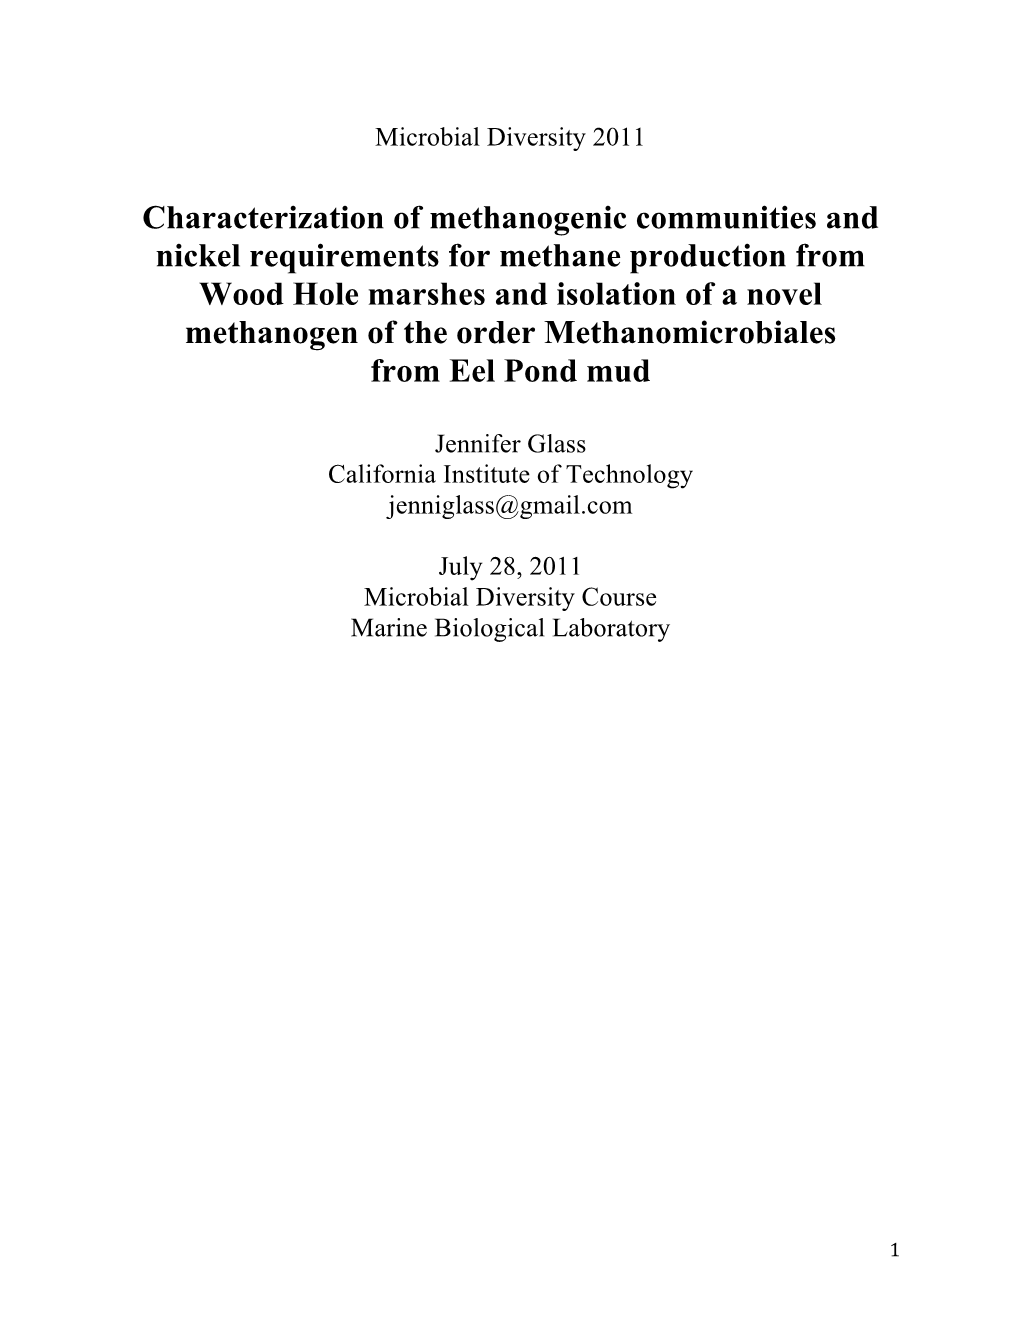 Characterization of Methanogenic Communities and Nickel